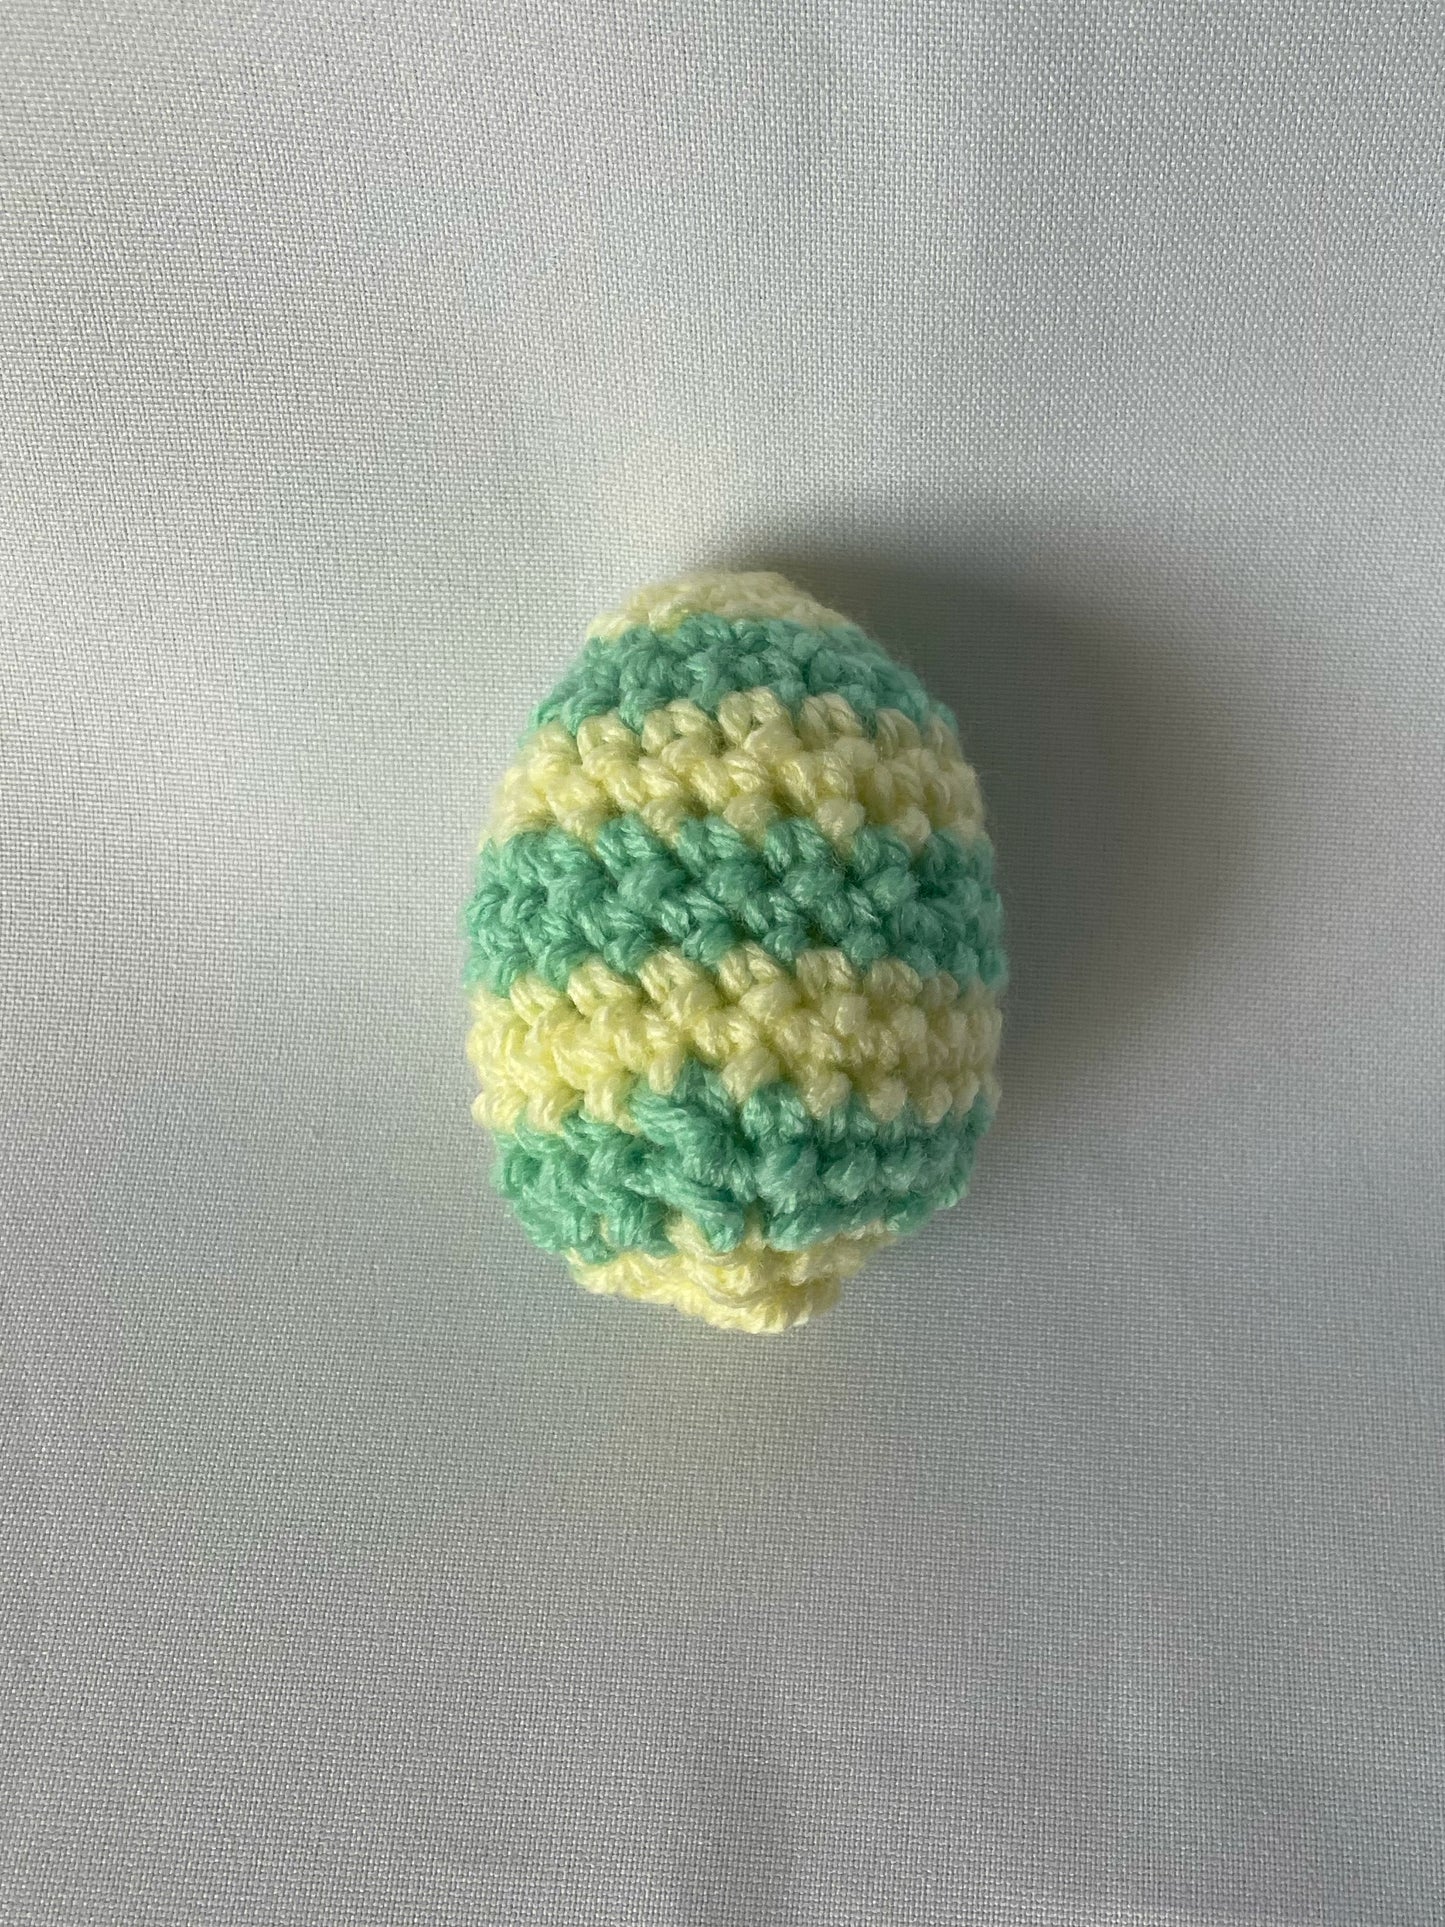 Stuffed Easter Egg - Striped